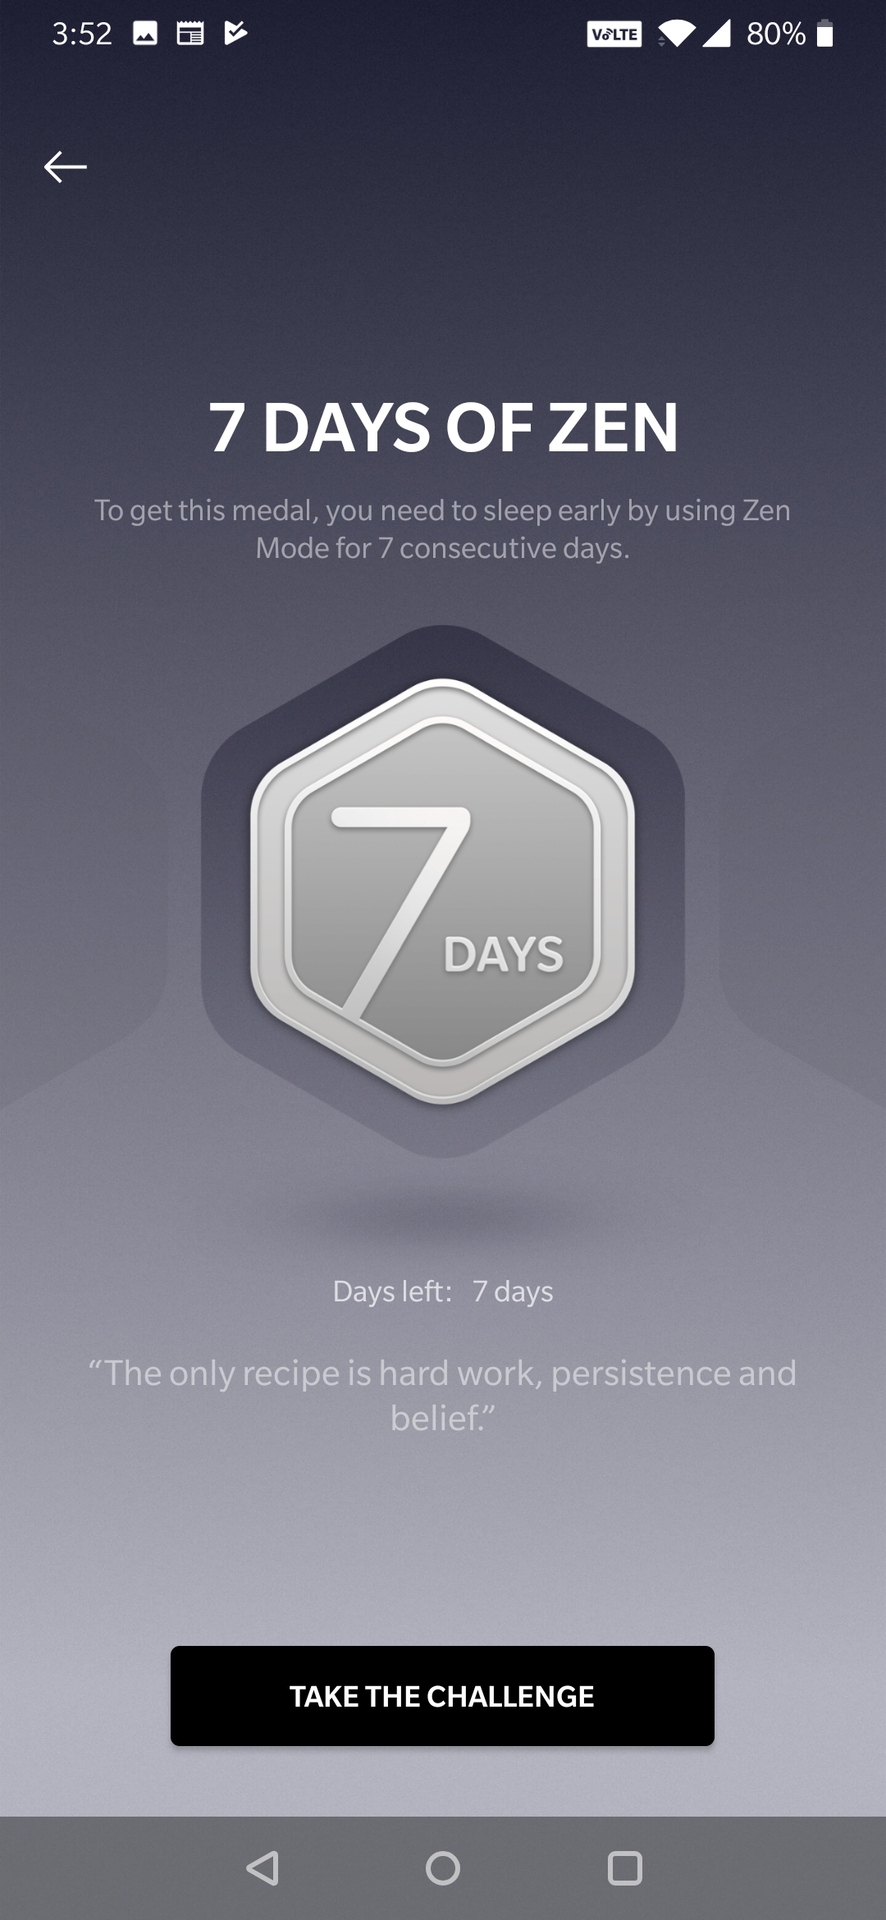 OnePlus zen mode 7 day challenge